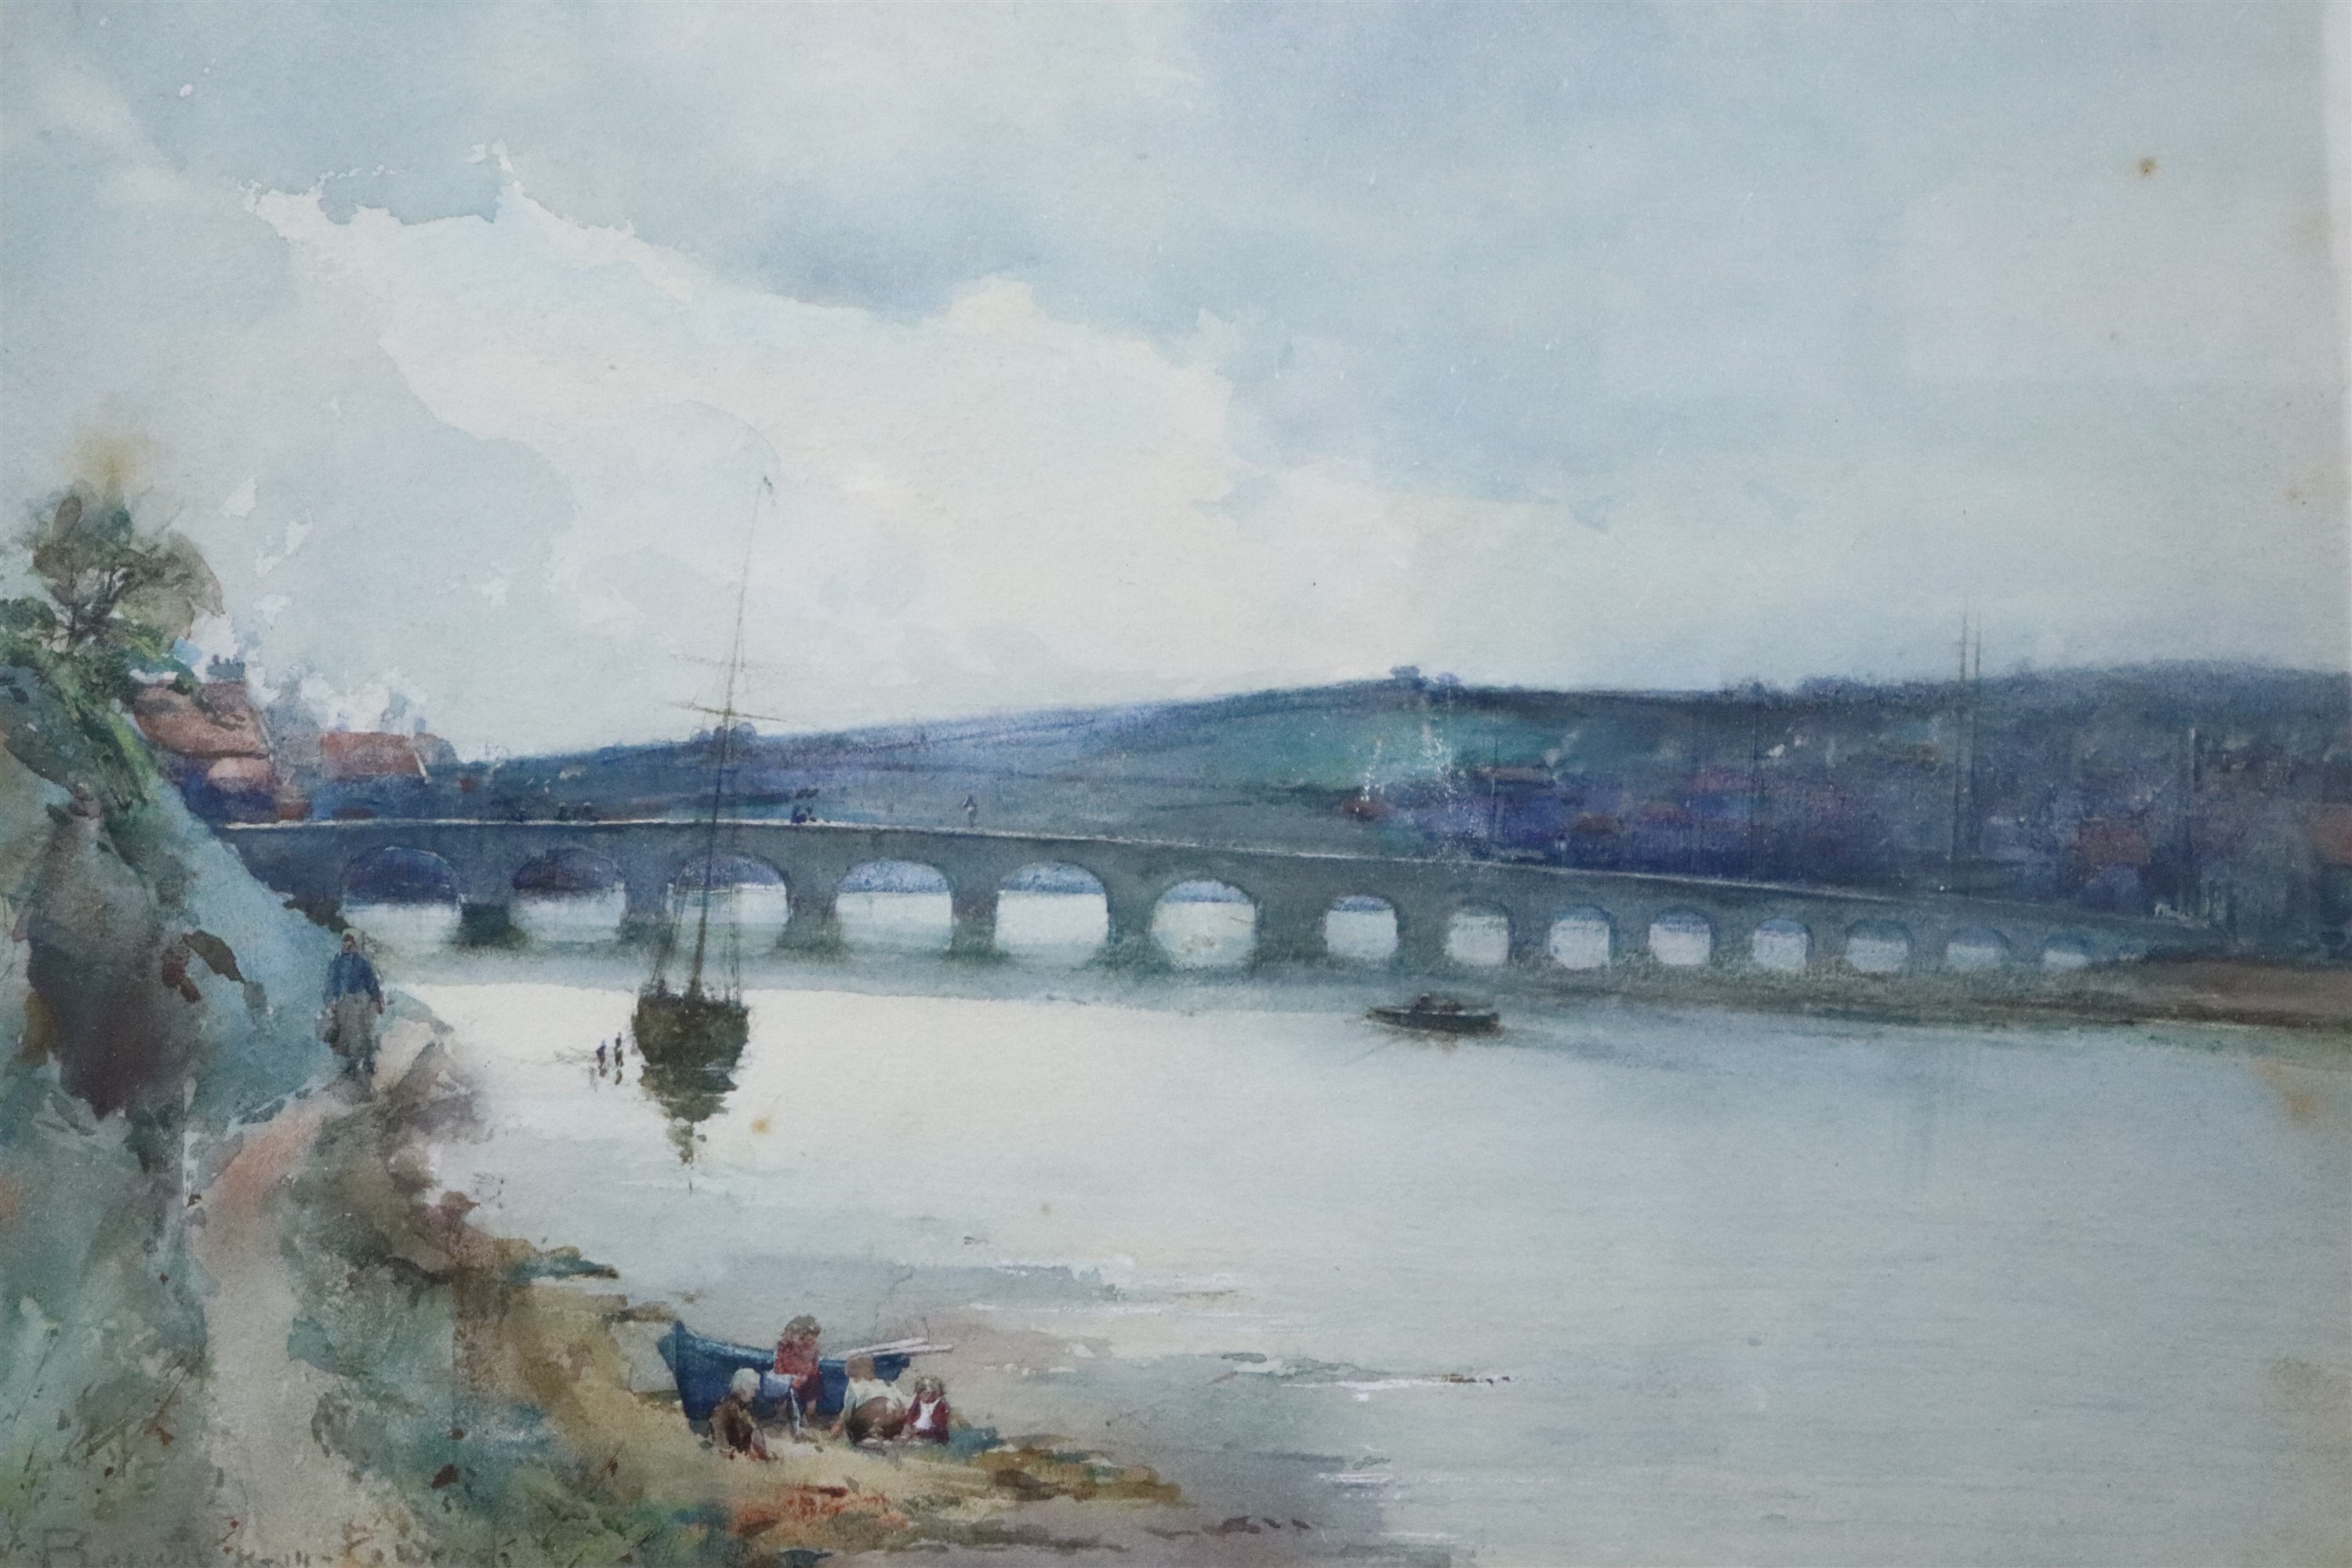 Thomas Marjoribanks - Hay (Scottish, 1862 - 1921) "Berwick - upon - Tweed", an impressionist